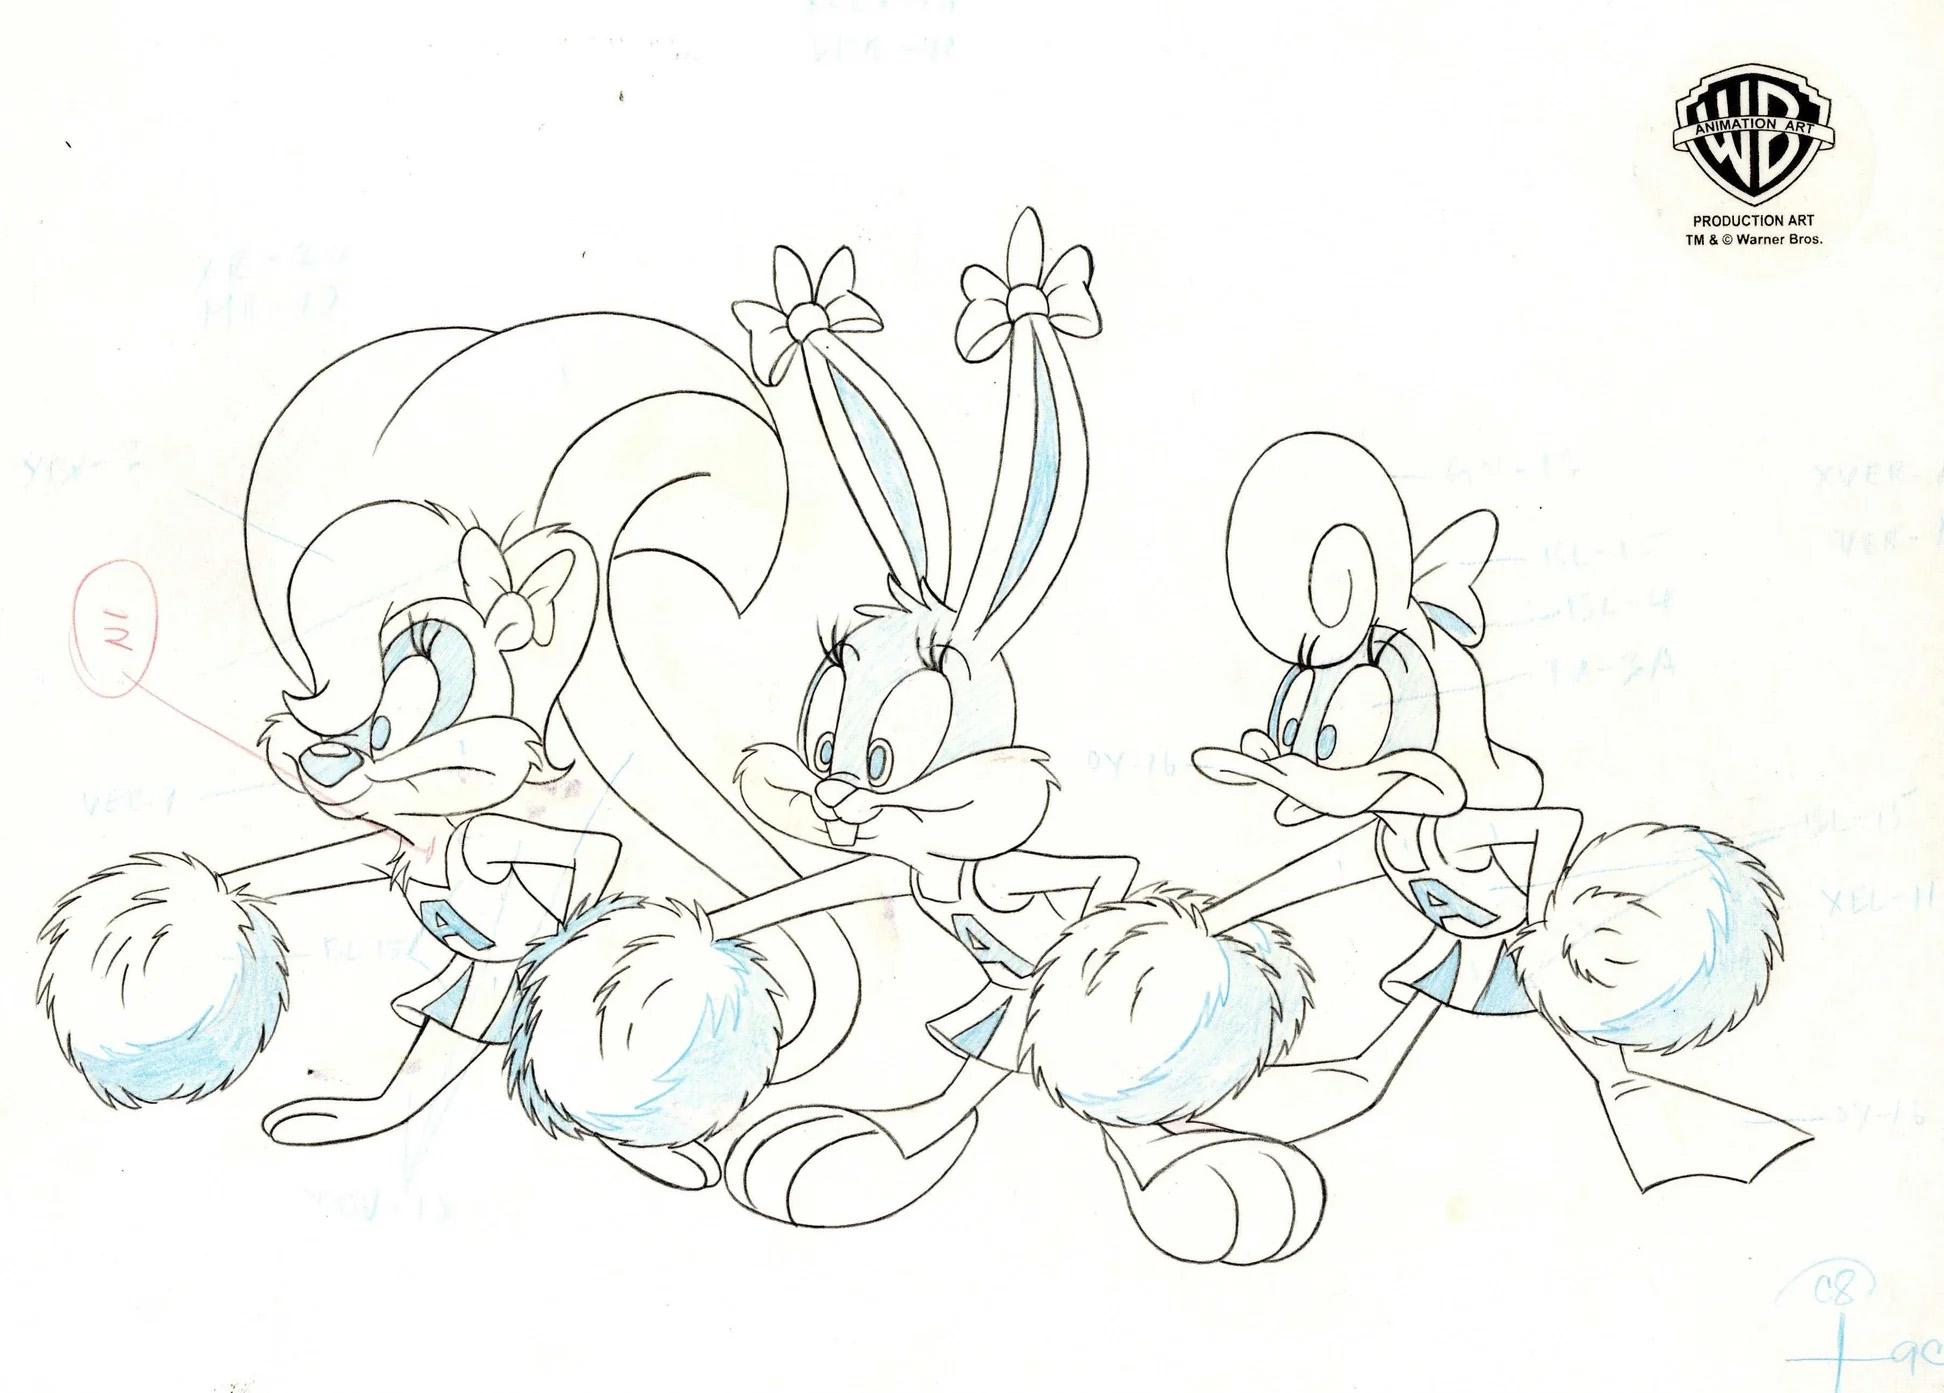 Tiny Toons Original Production Drawing: Fifi, Babs, Shirley - Art by Warner Bros. Studio Artists